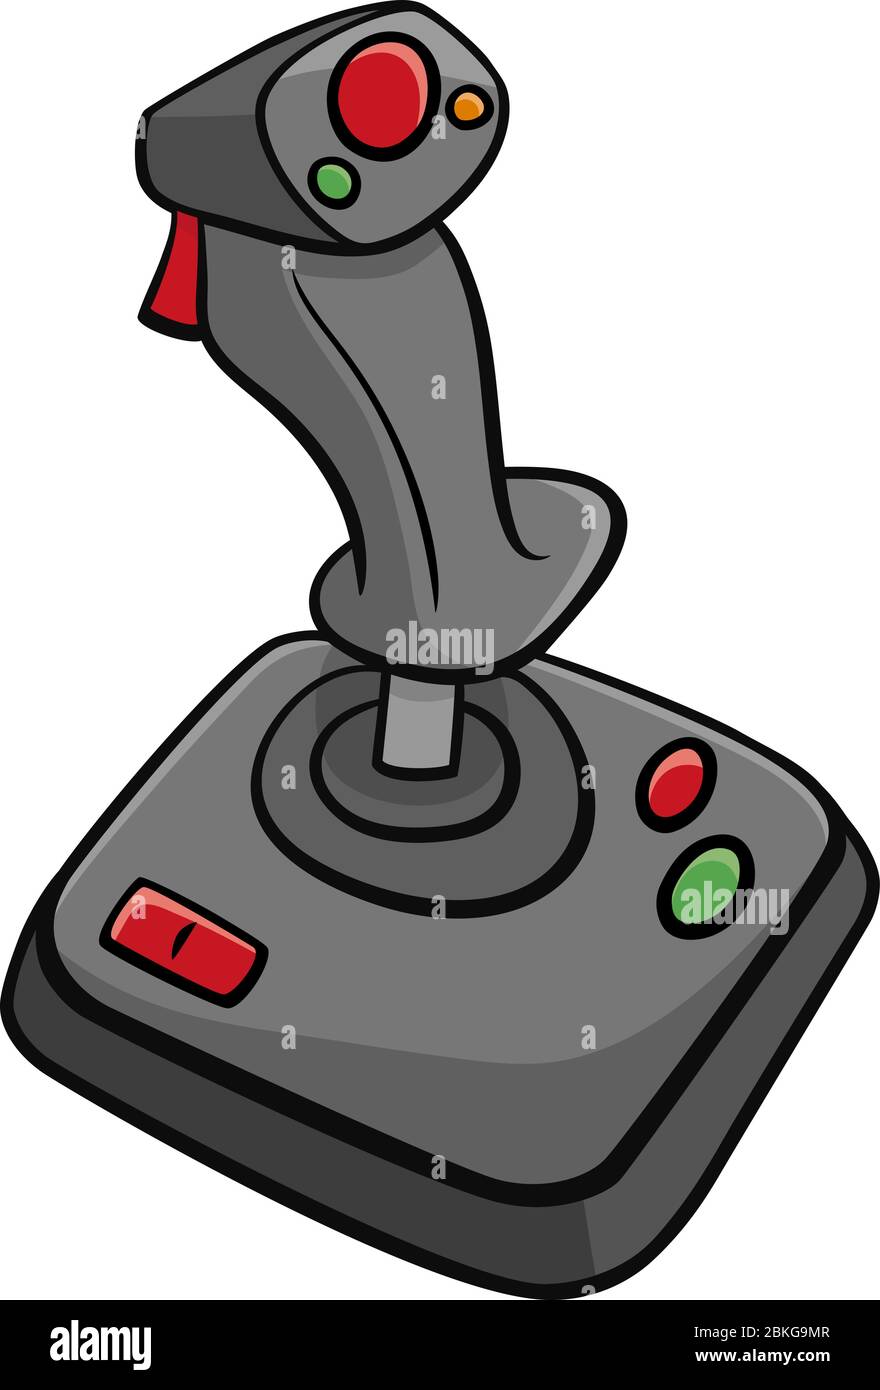 Cartoon Illustration of Joystick Input Device Computer Game Controller Clip Art Stock Vector